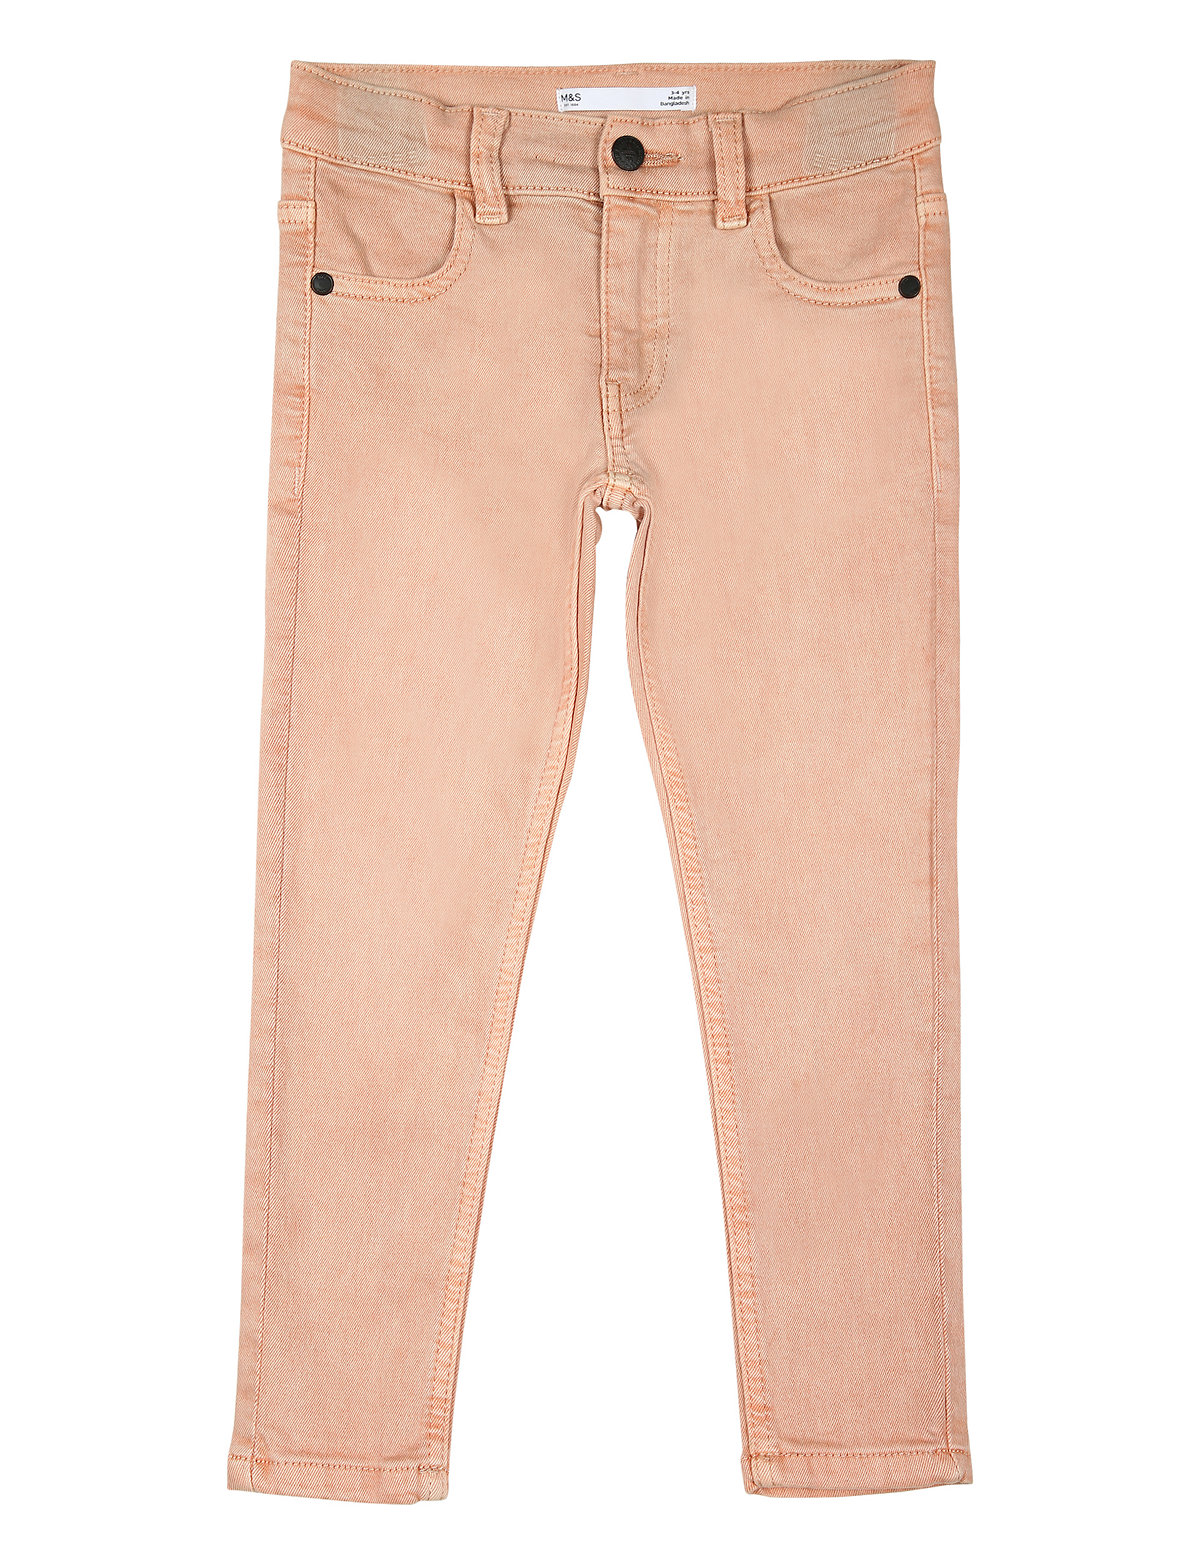 H Pink Skinny Jeans (2-7 Yrs)